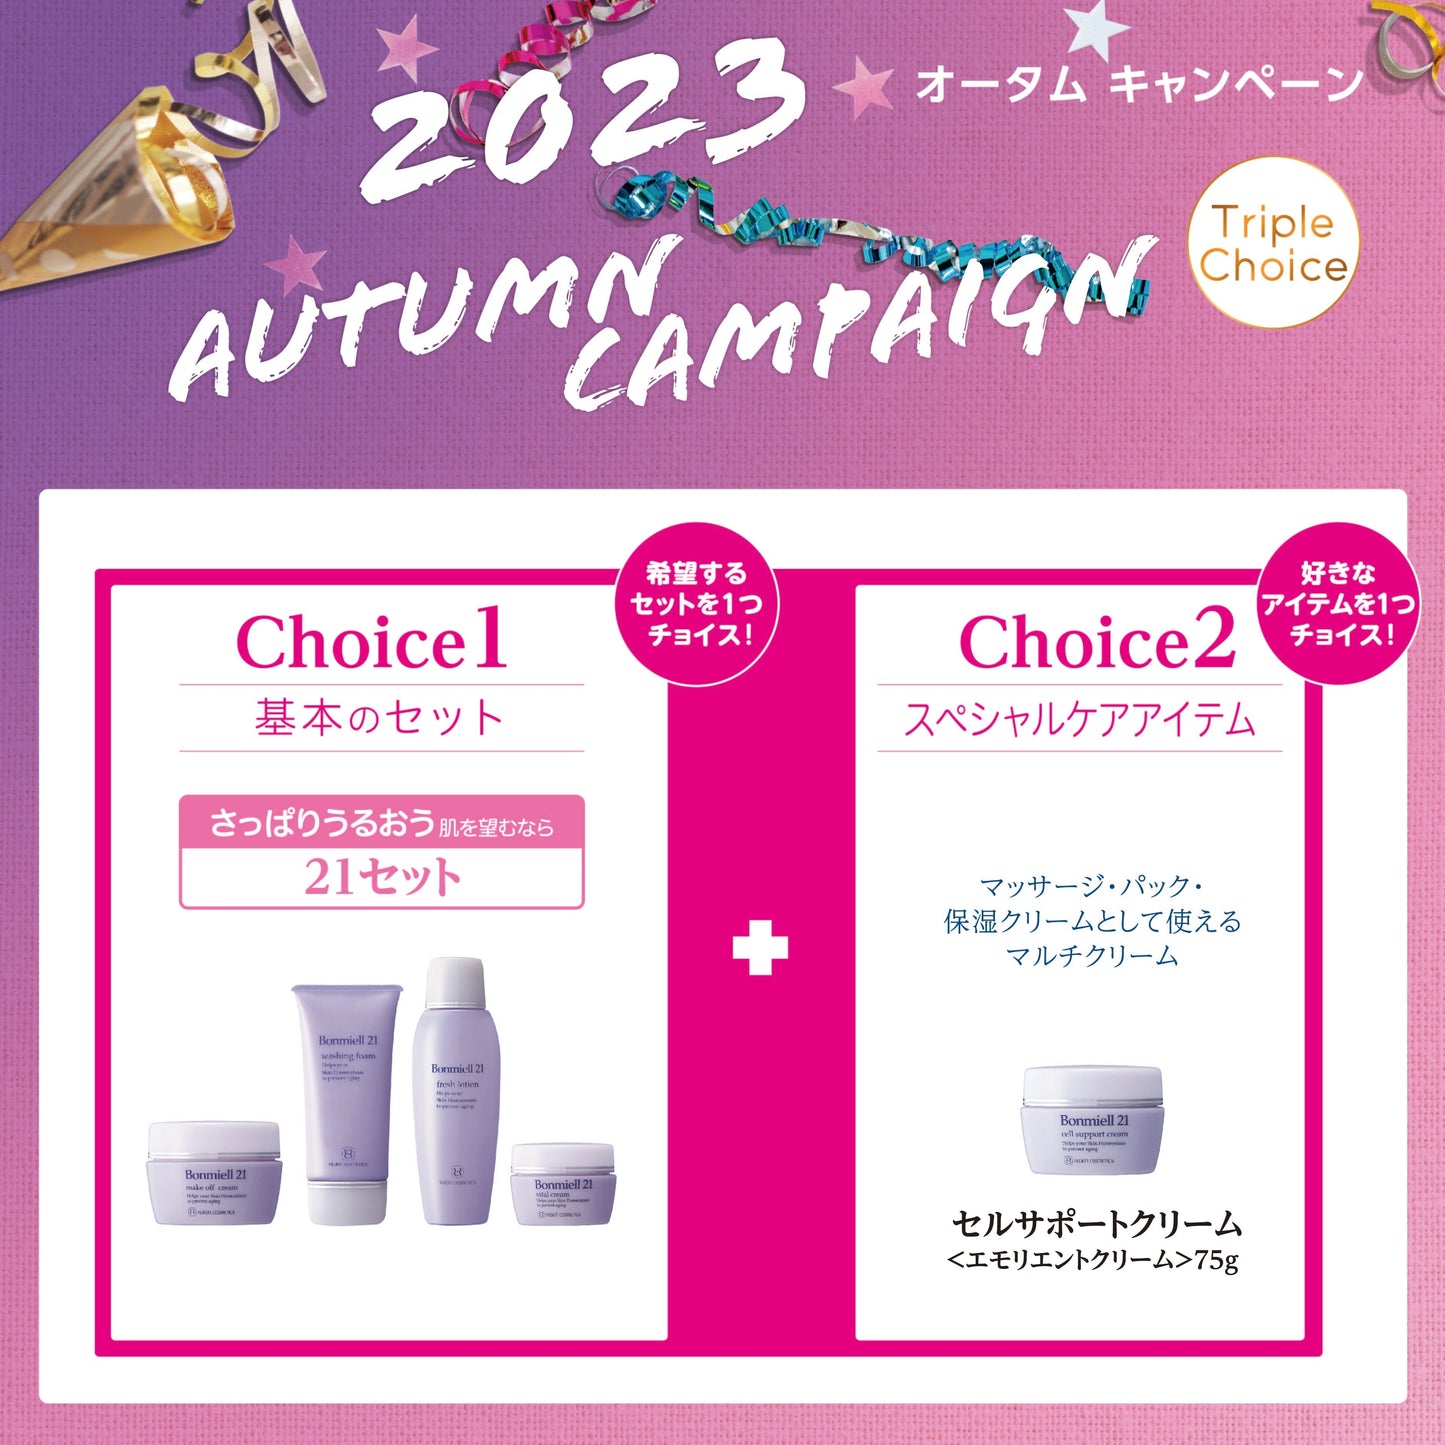 【New】2023 Autumn Campaign Lumiaura Set